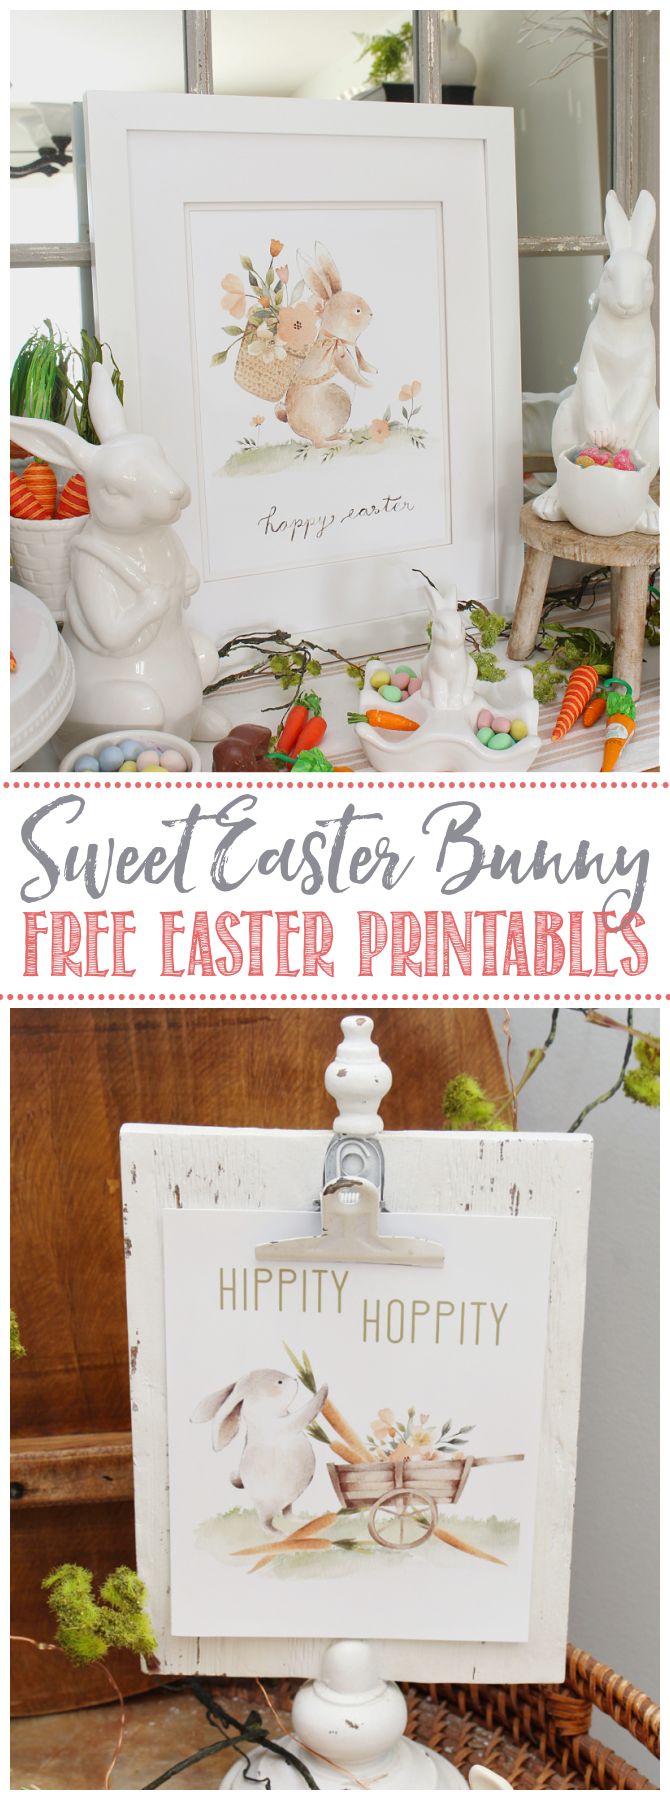 Sweet Easter bunny printables displayed in Easter vignettes.